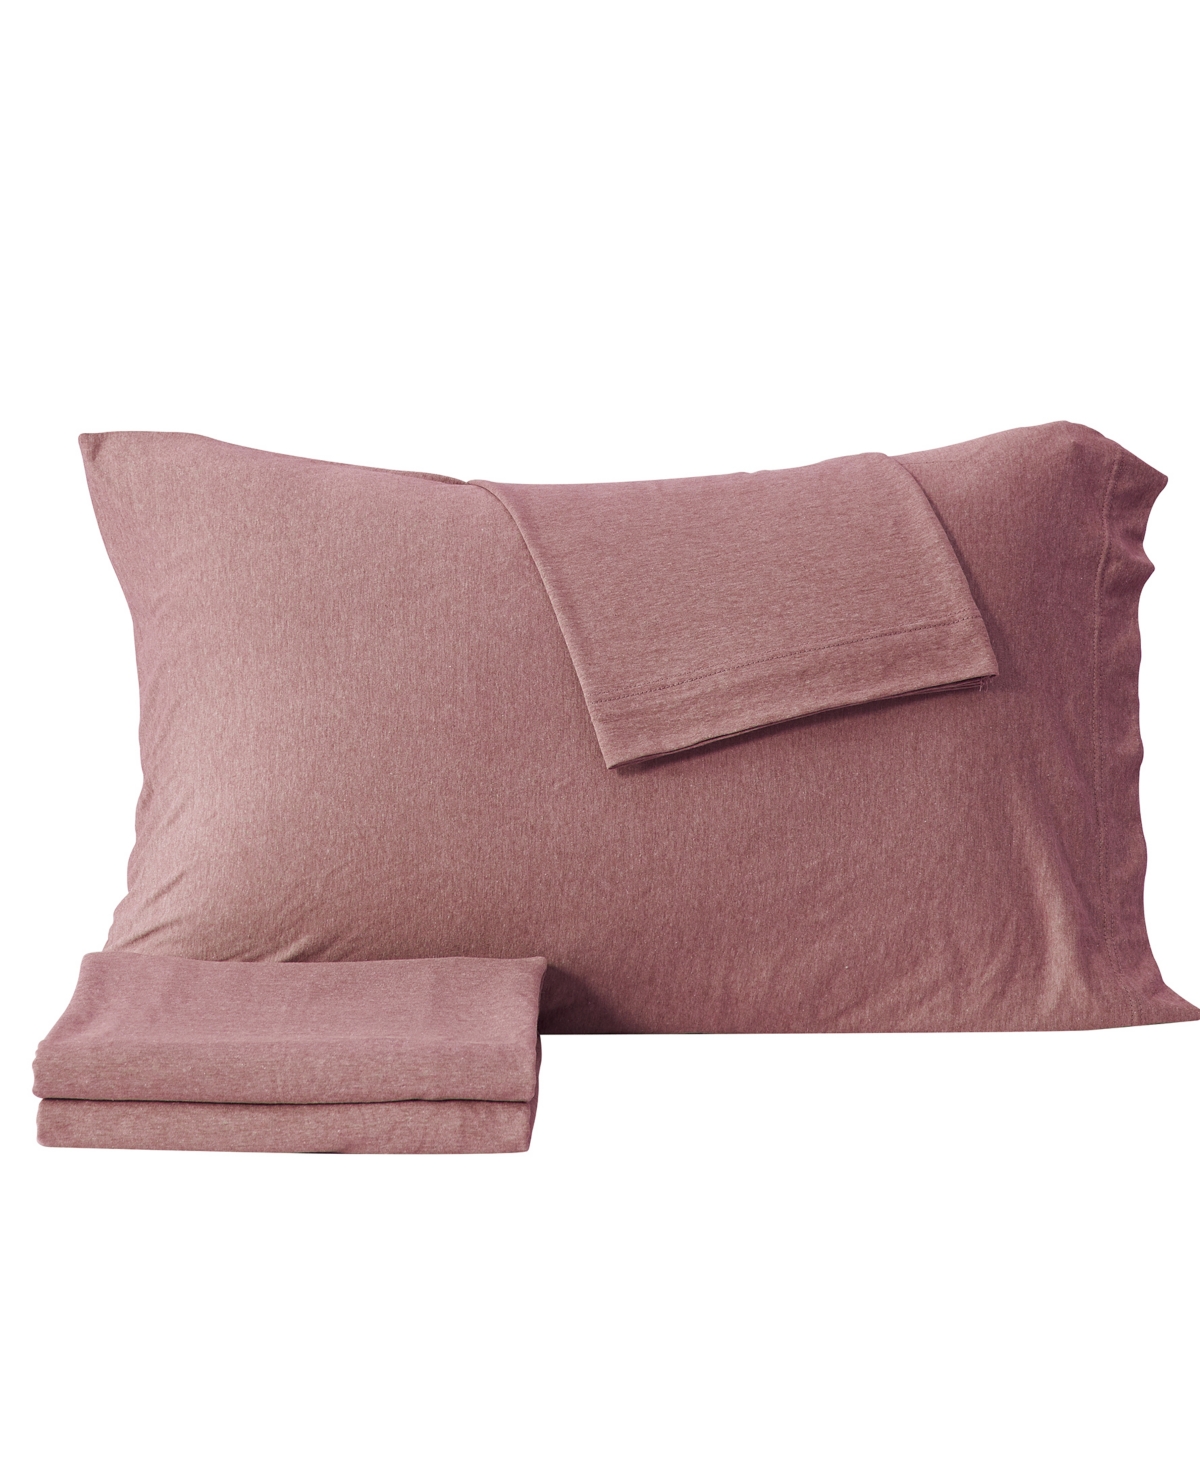 Premium Comforts Heathered Melange T-shirt Jersey Knit Cotton Blend 3 Piece Sheet Set, Twin In Heathered Dusty Rose